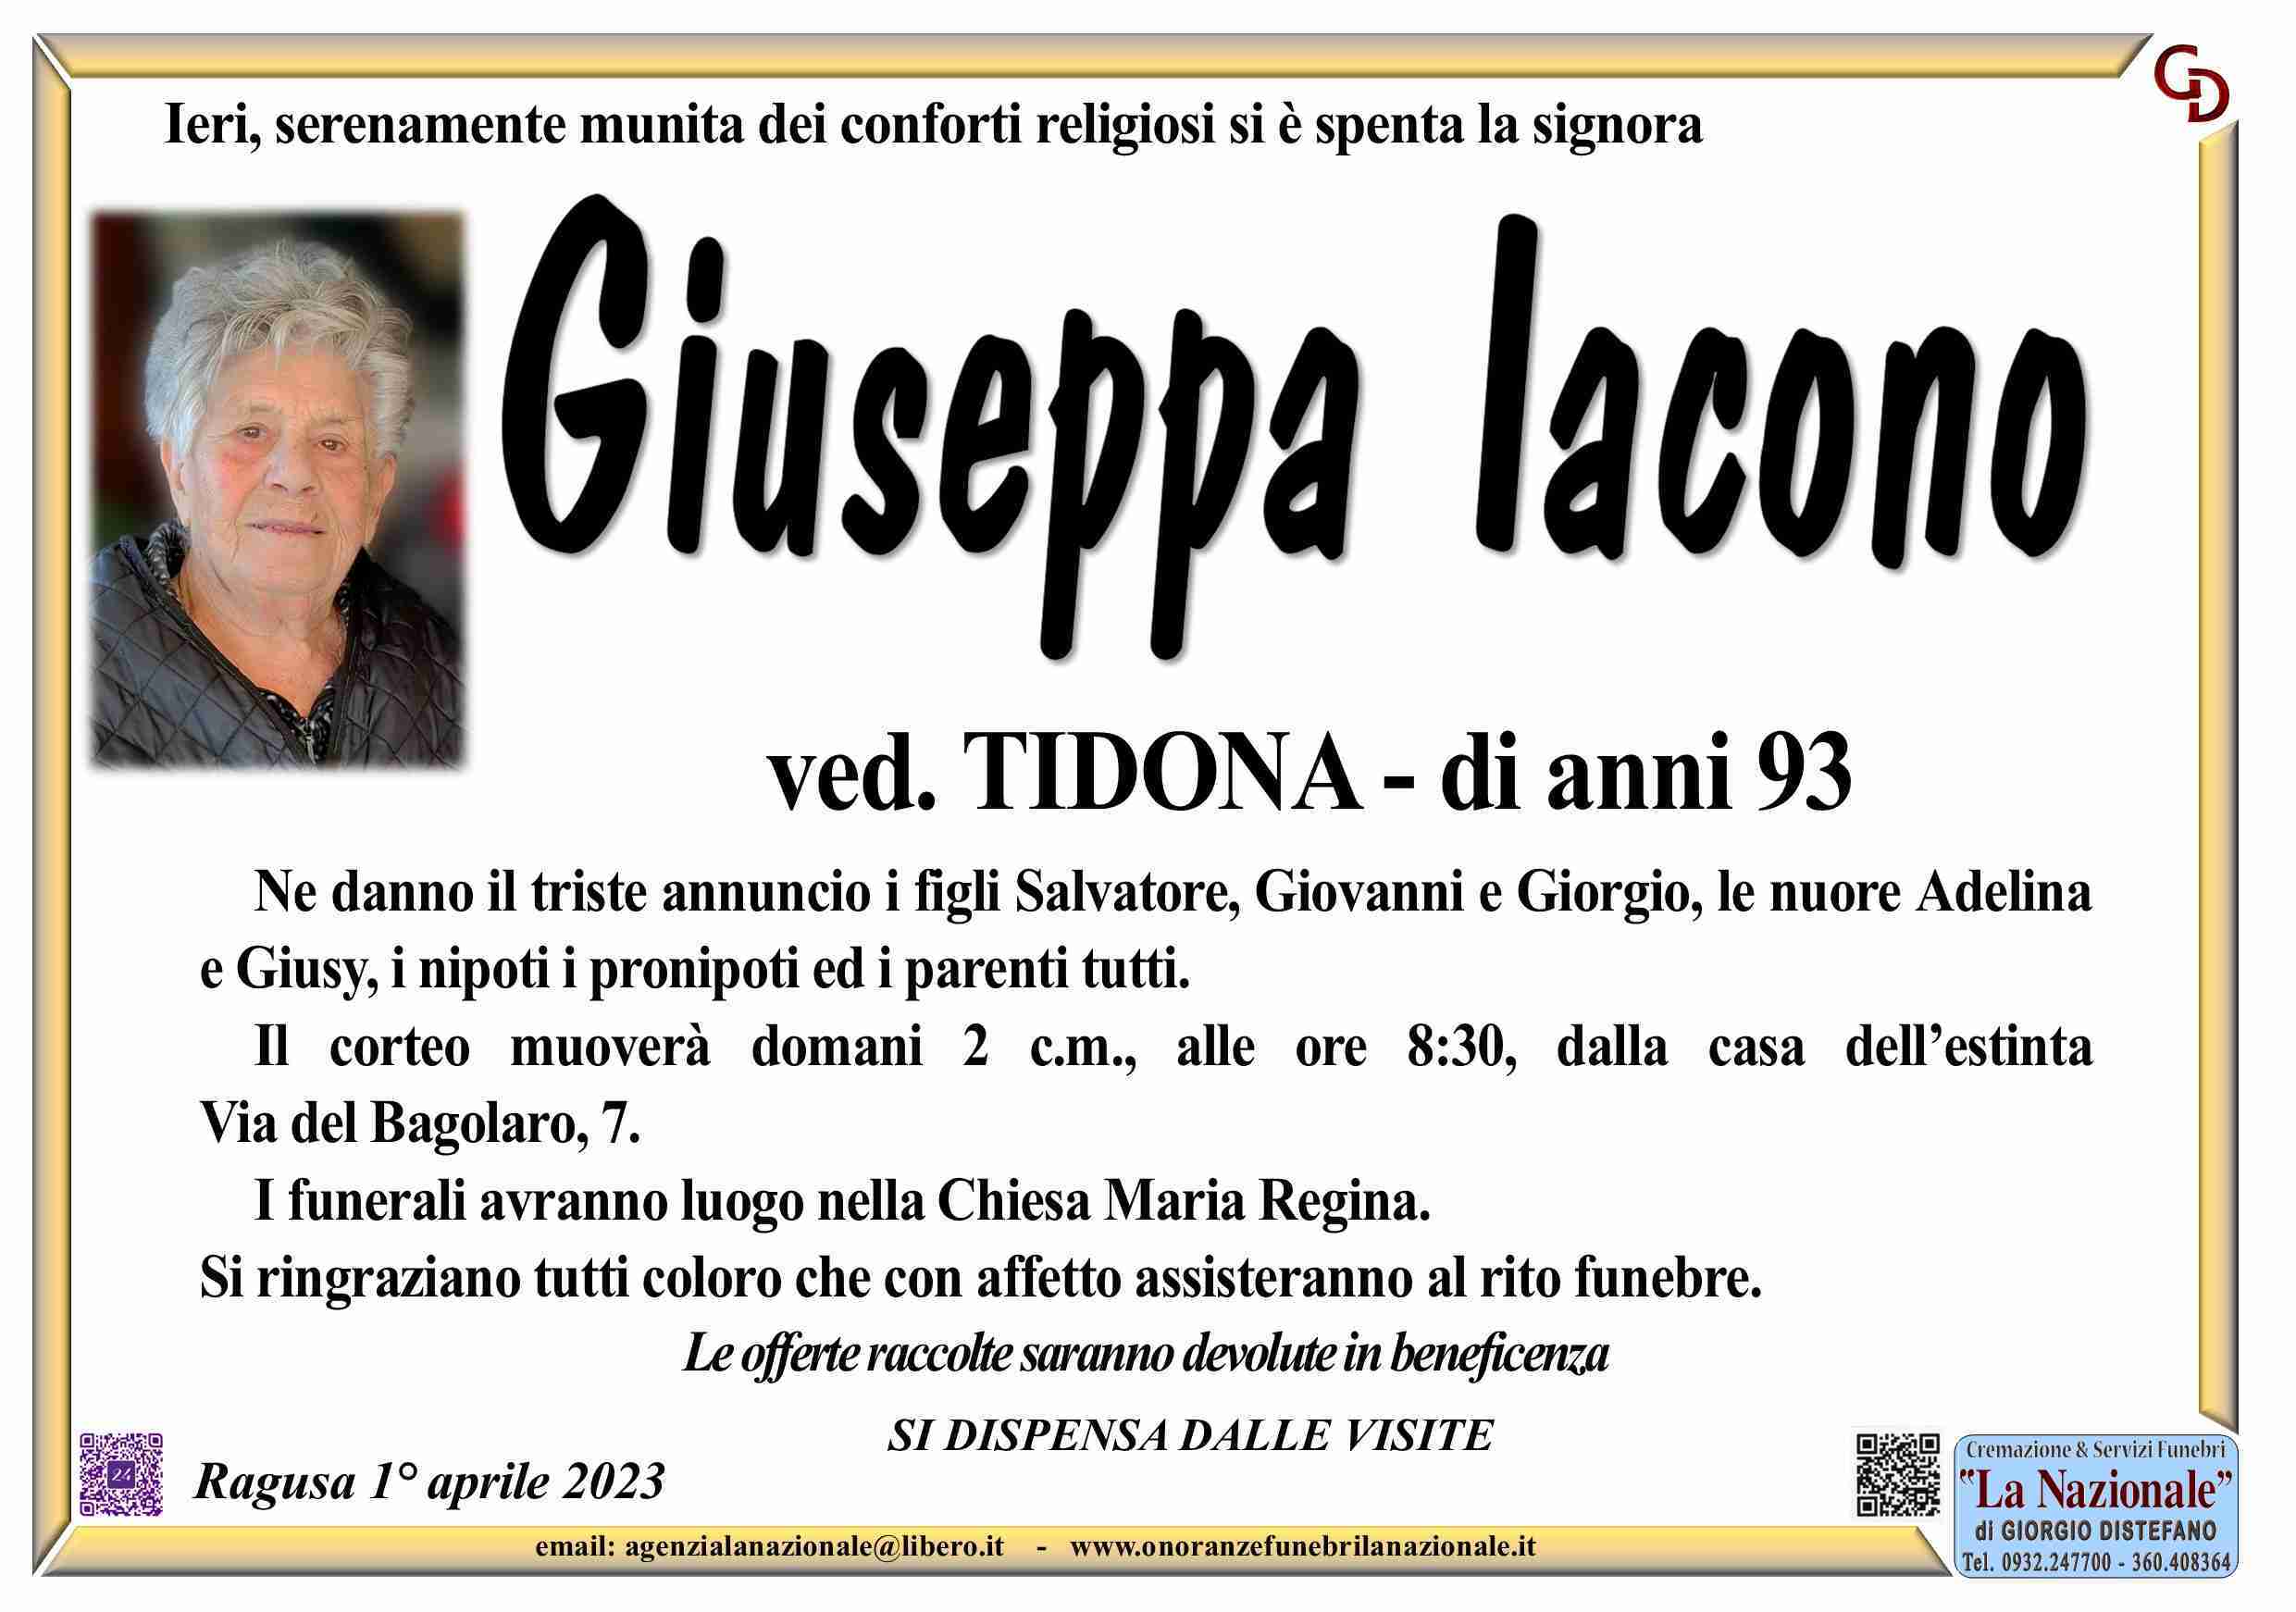 Giuseppa Iacono